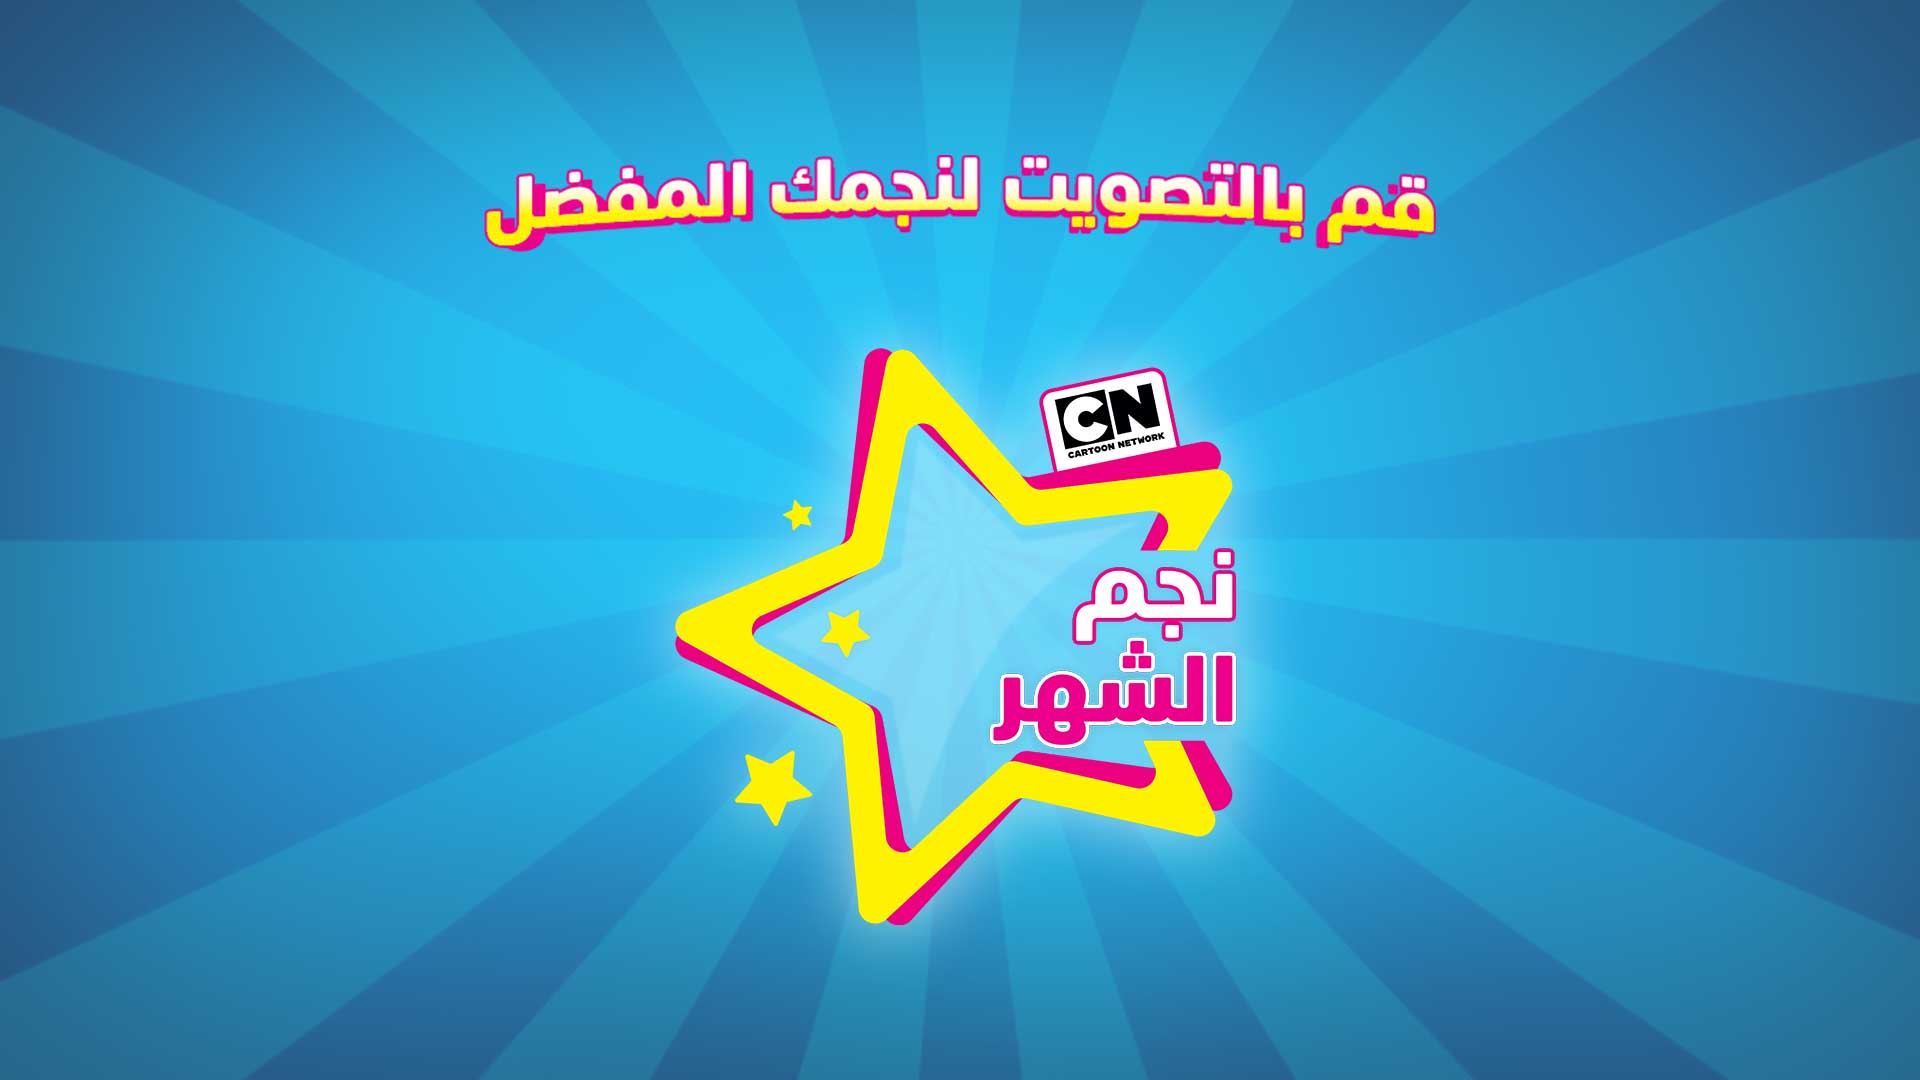 Cartoon network arabic.com/star تصويت